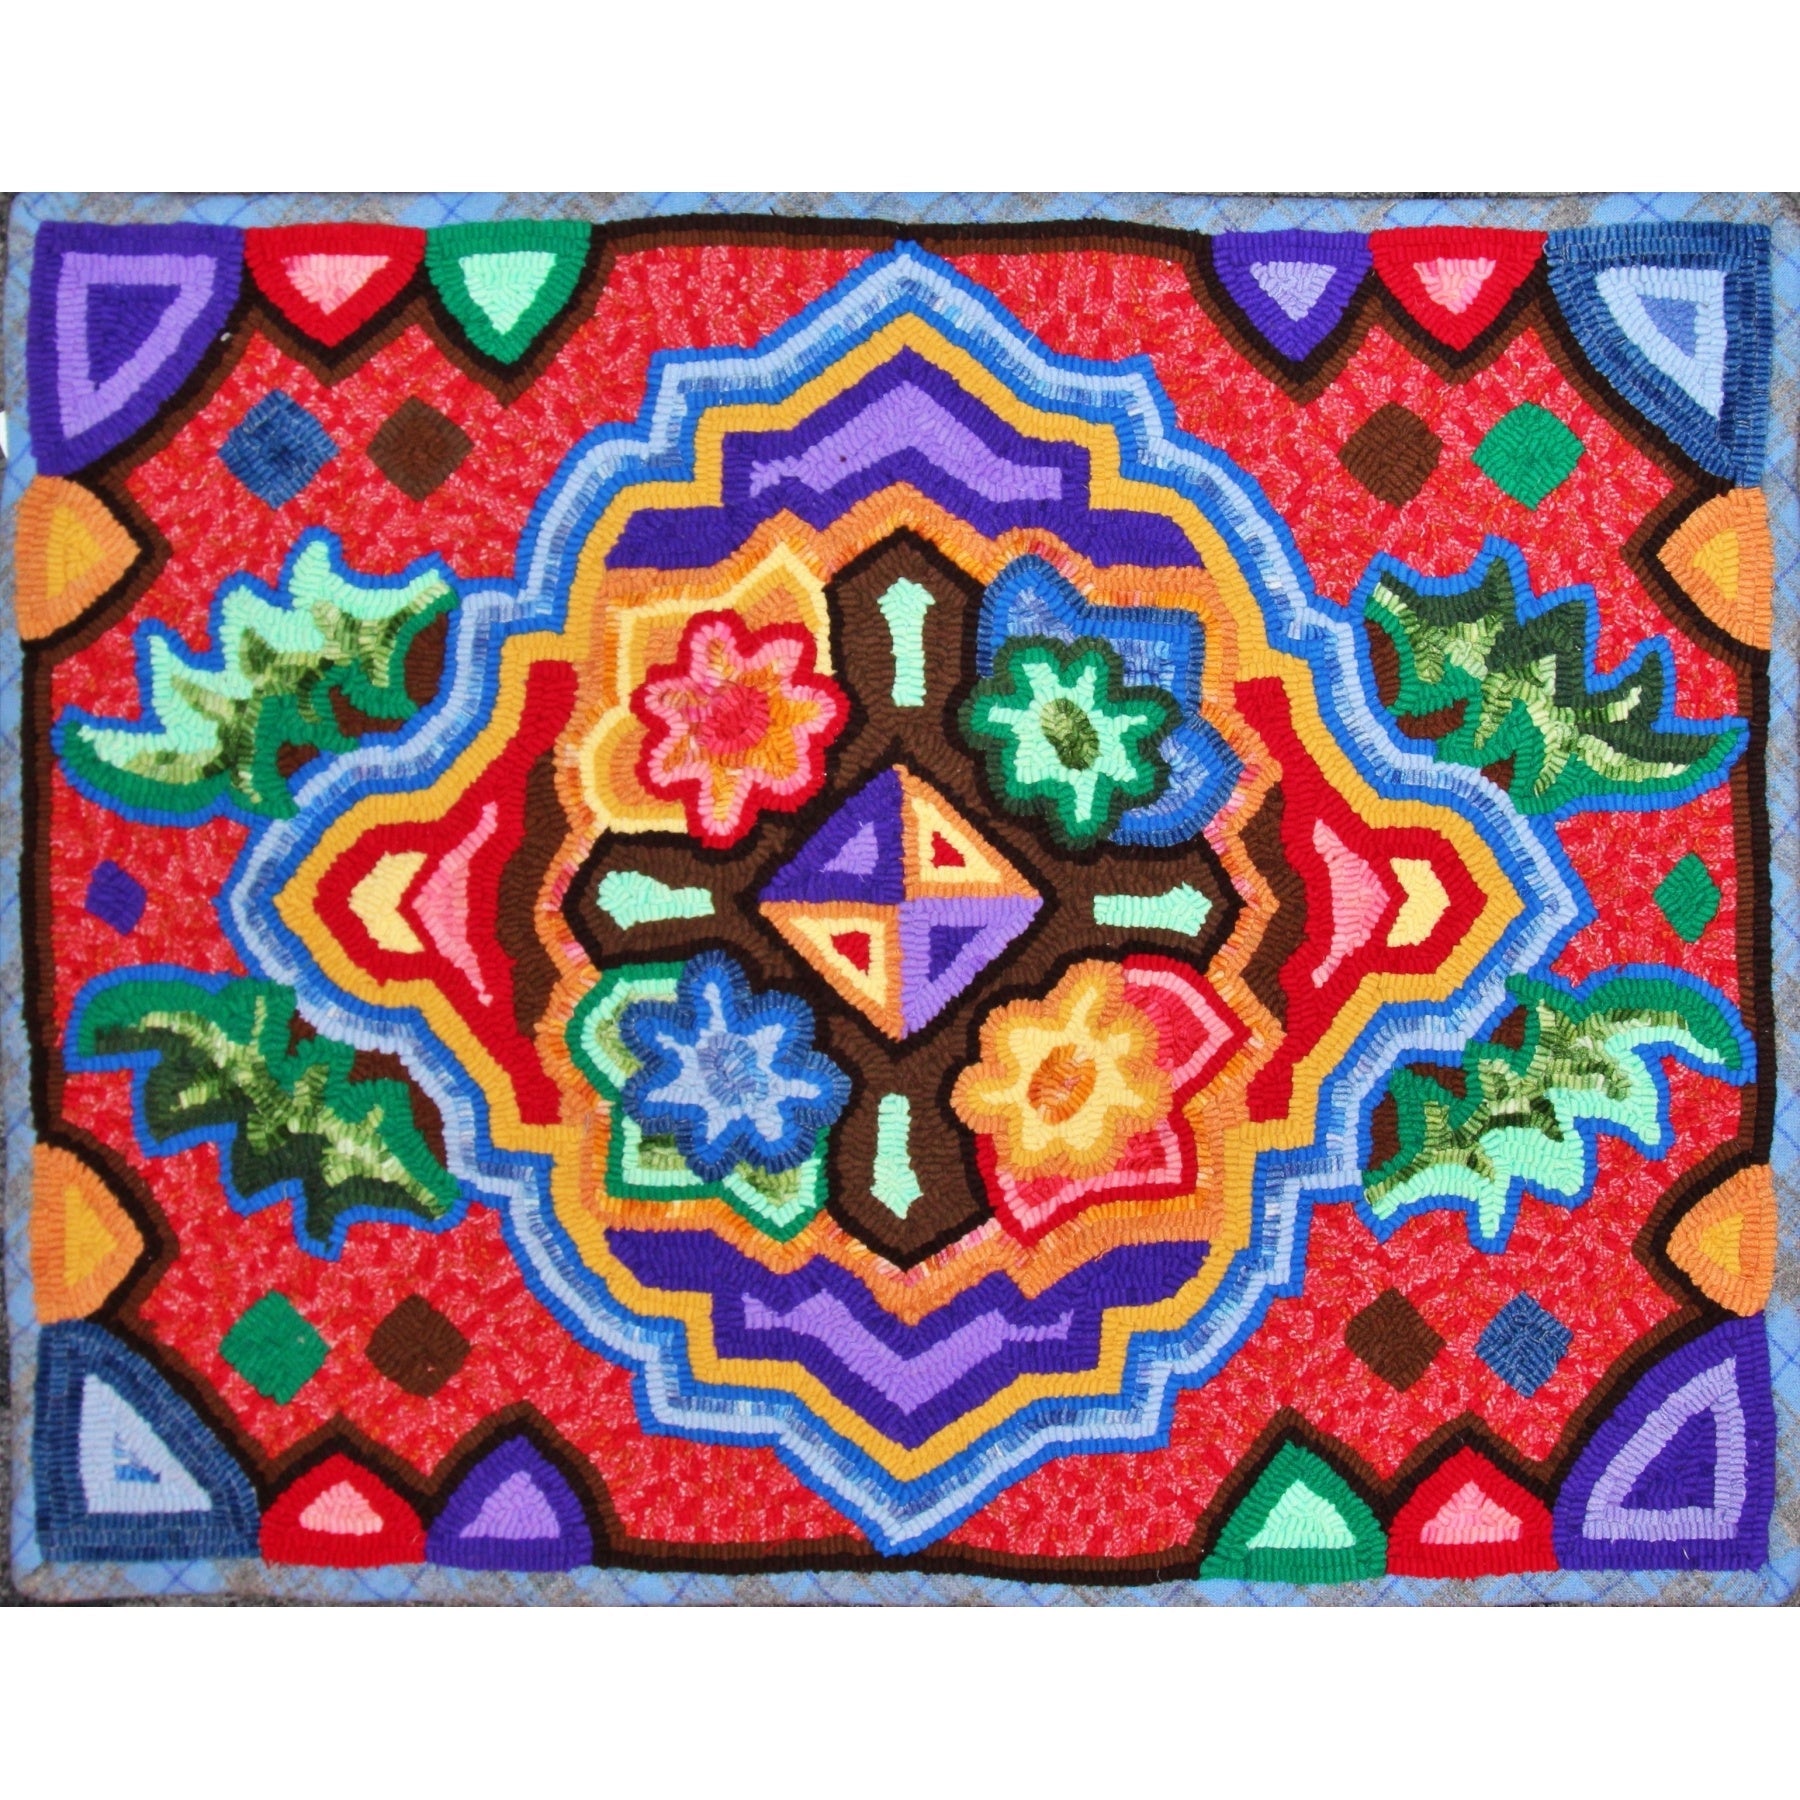 Multicolores Pattern #3, rug hooked by Teresa Steele